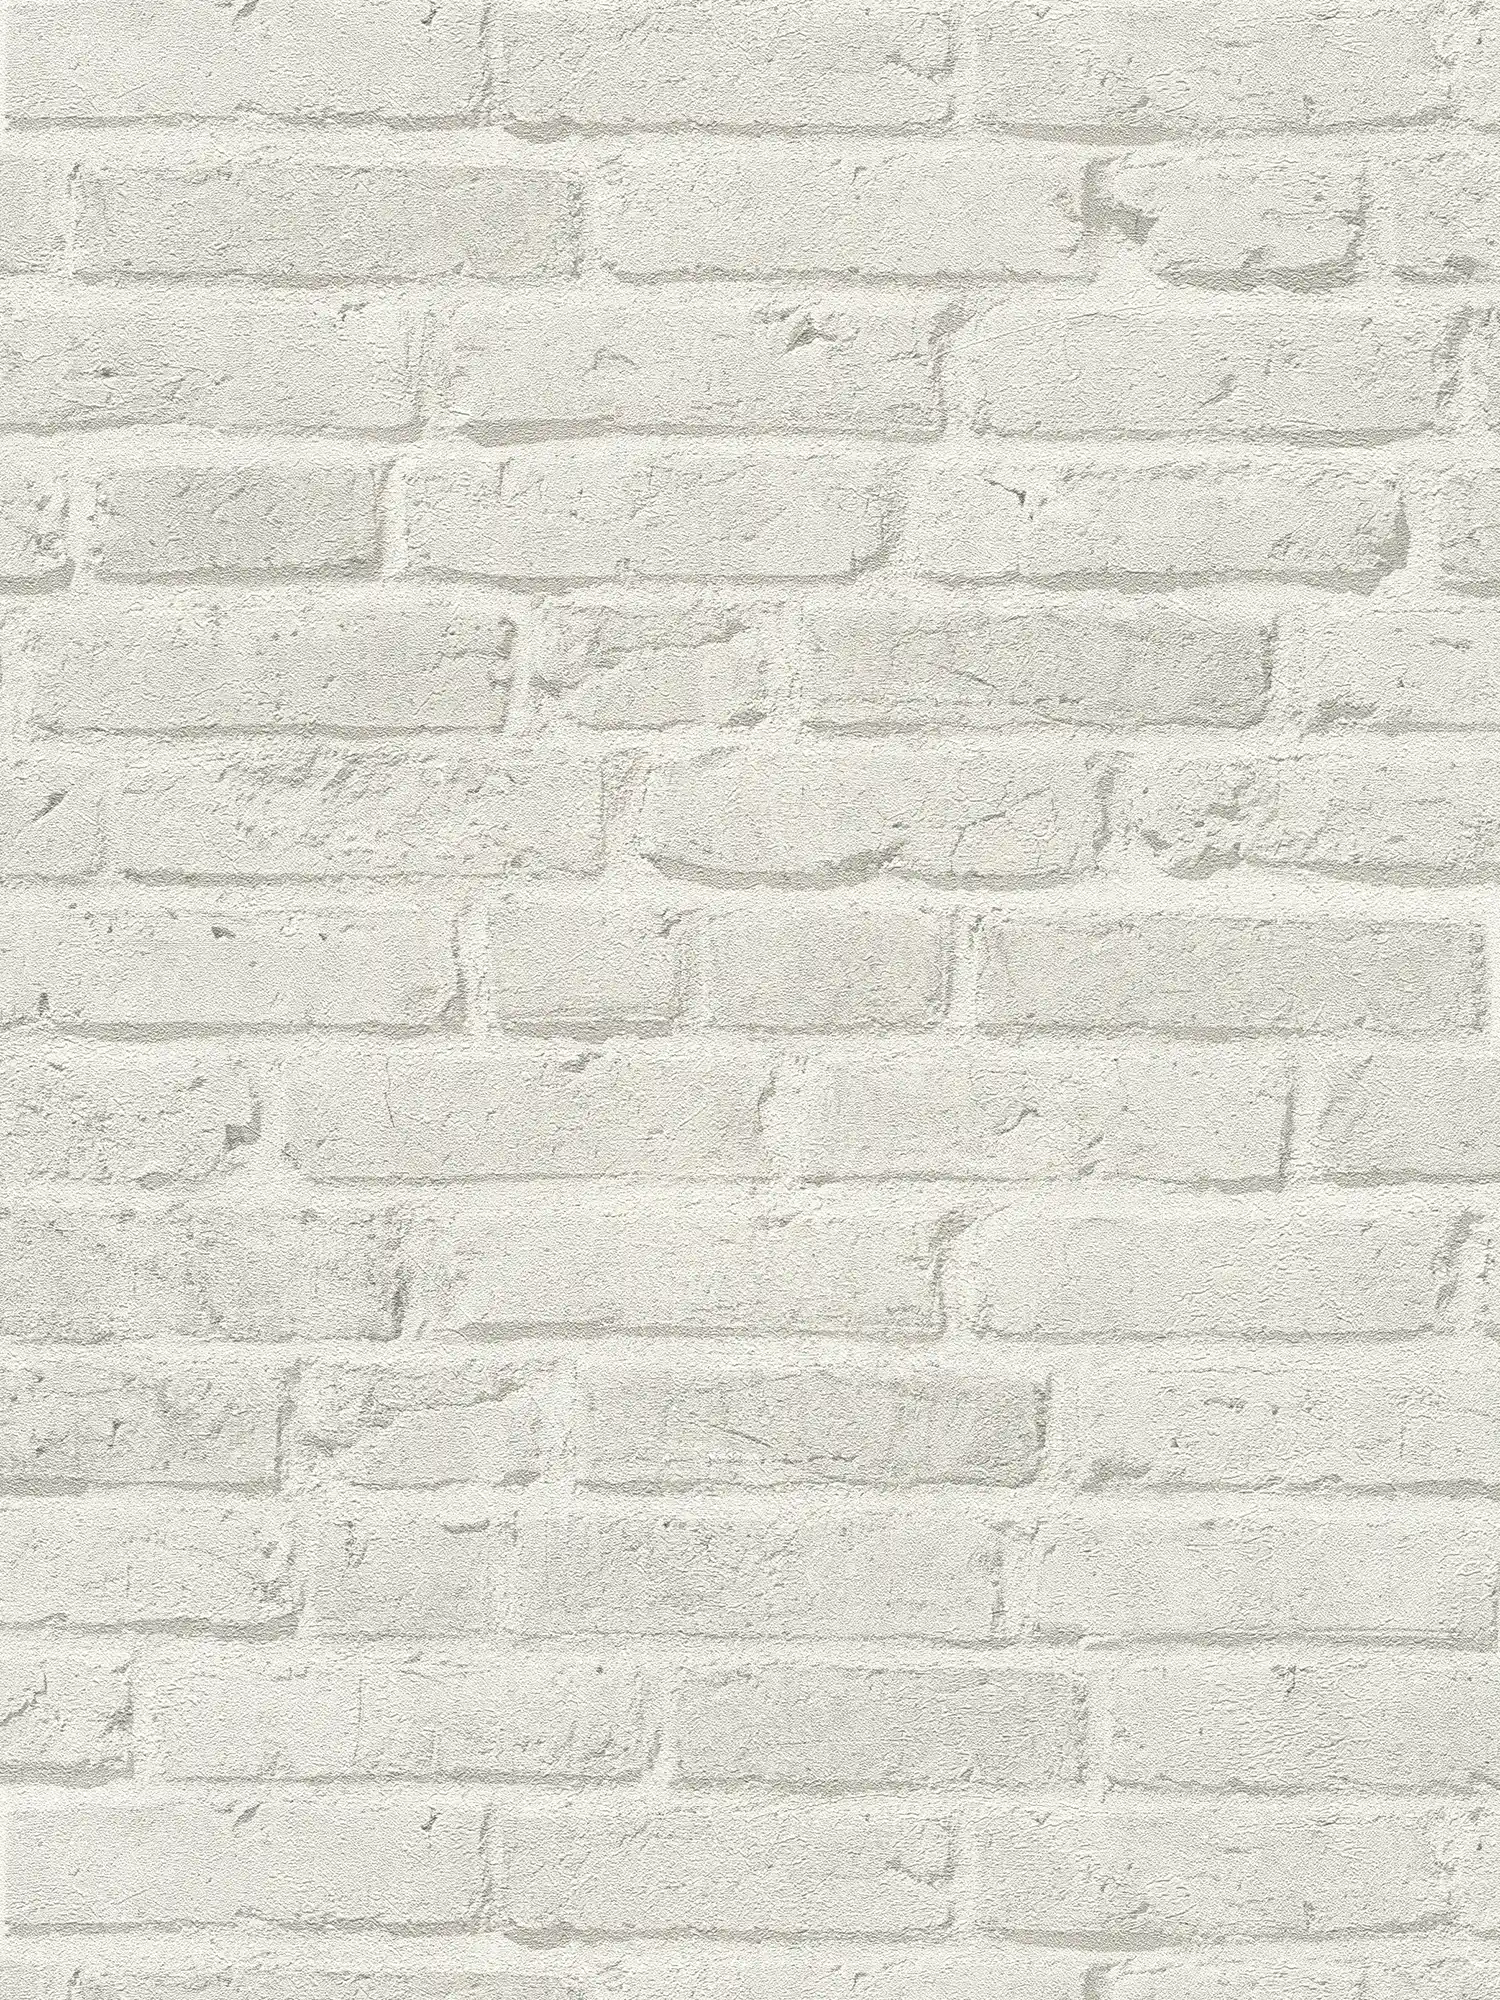 Brick wallpaper with wall optics & structural pattern - grey
